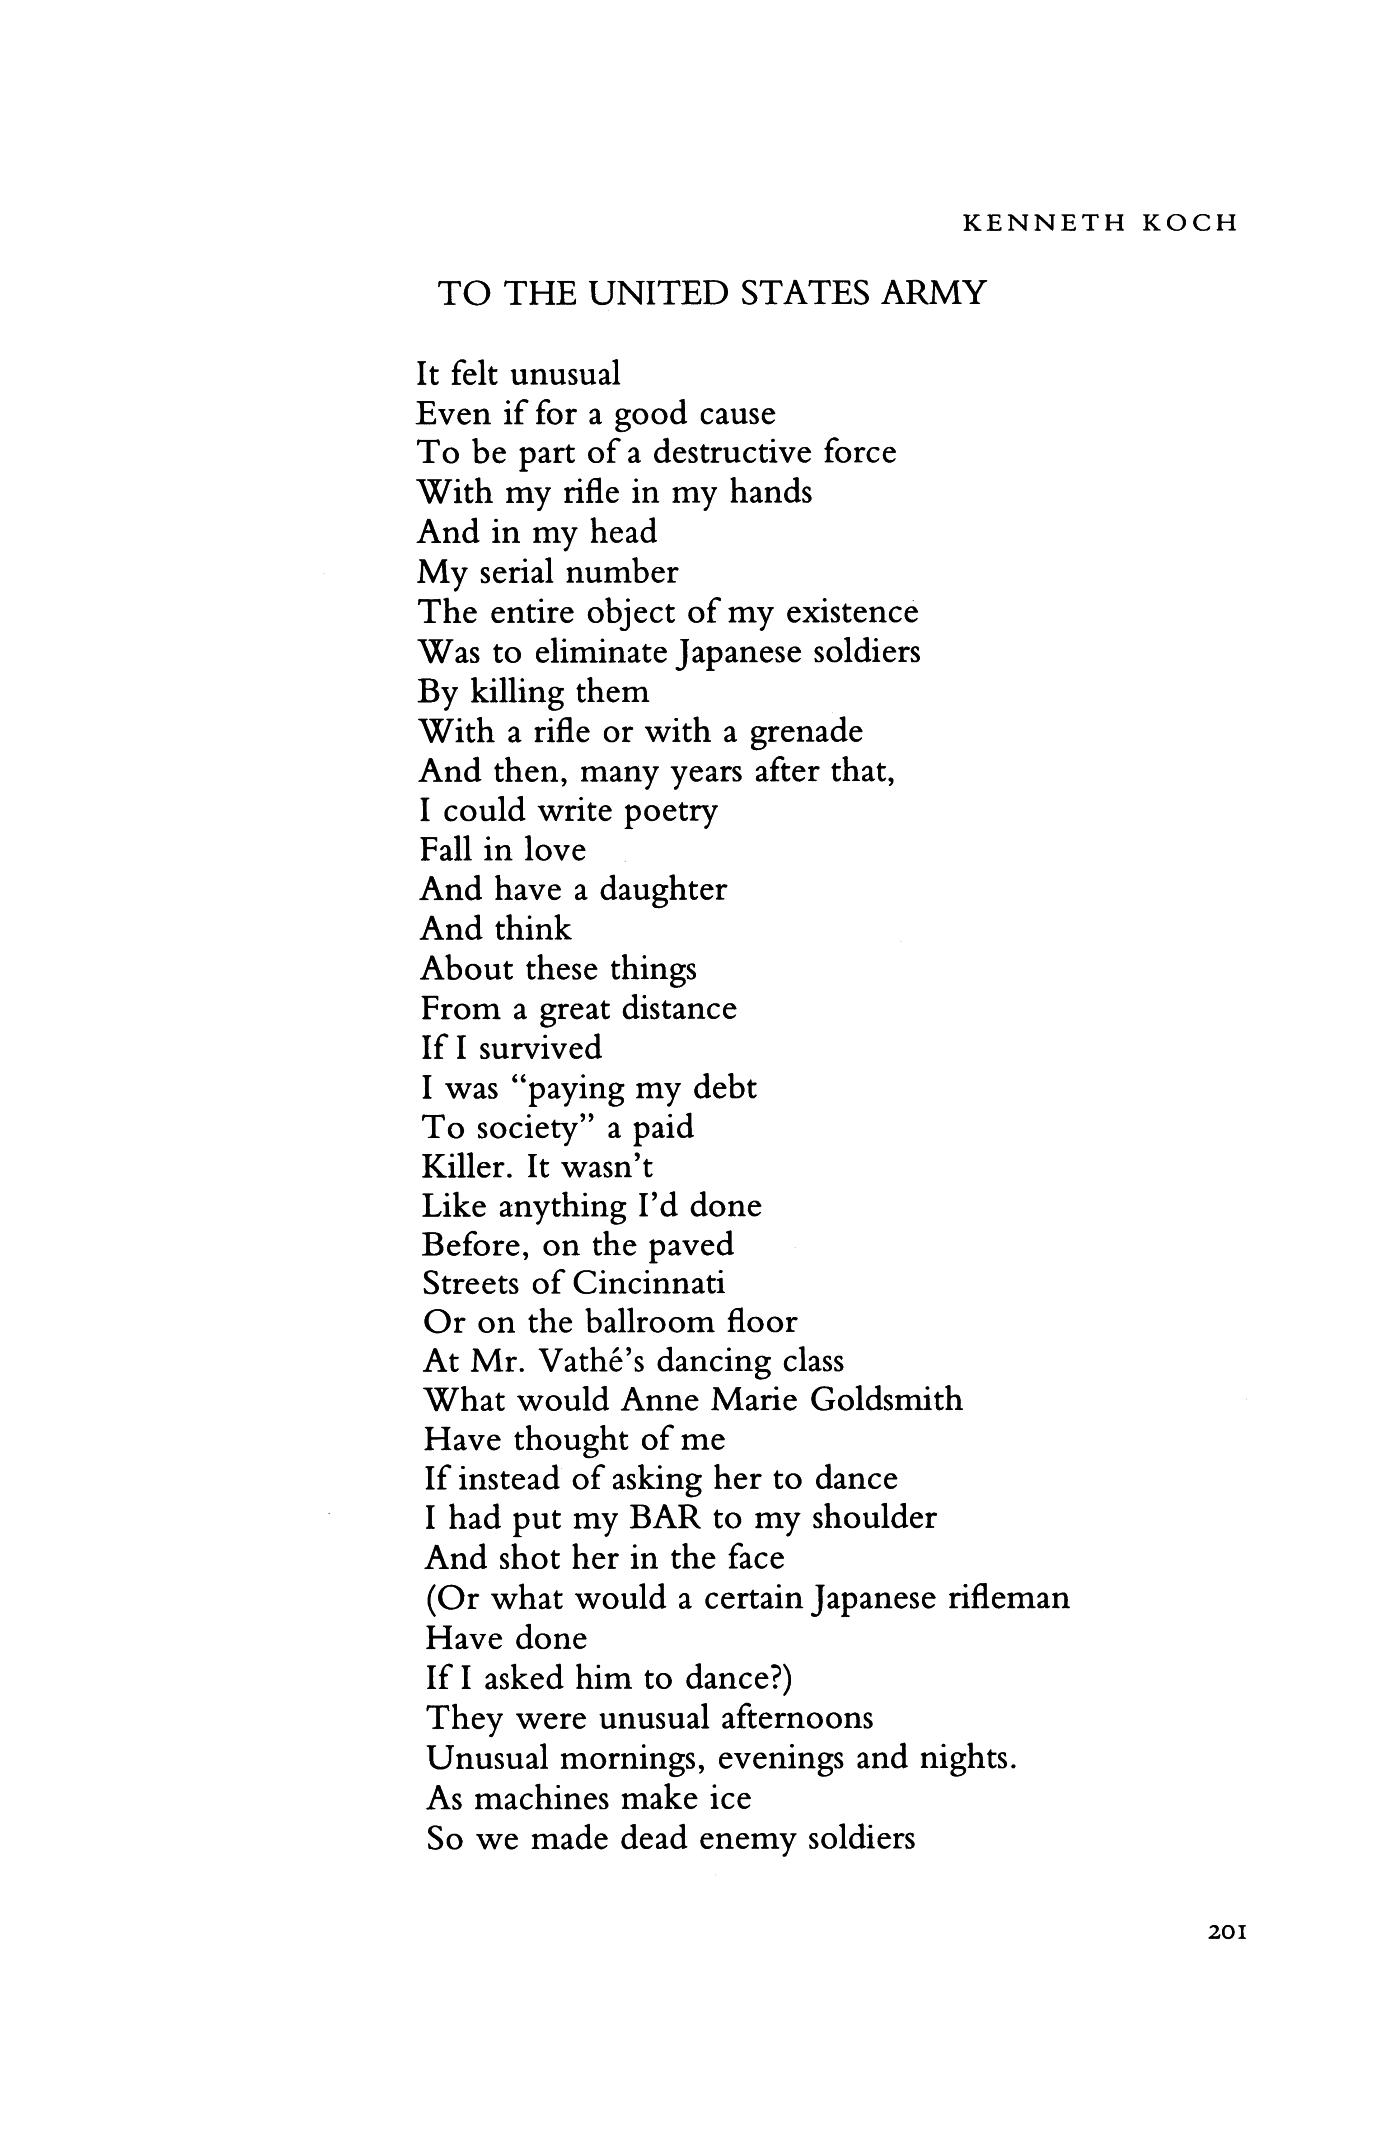 army wife poems